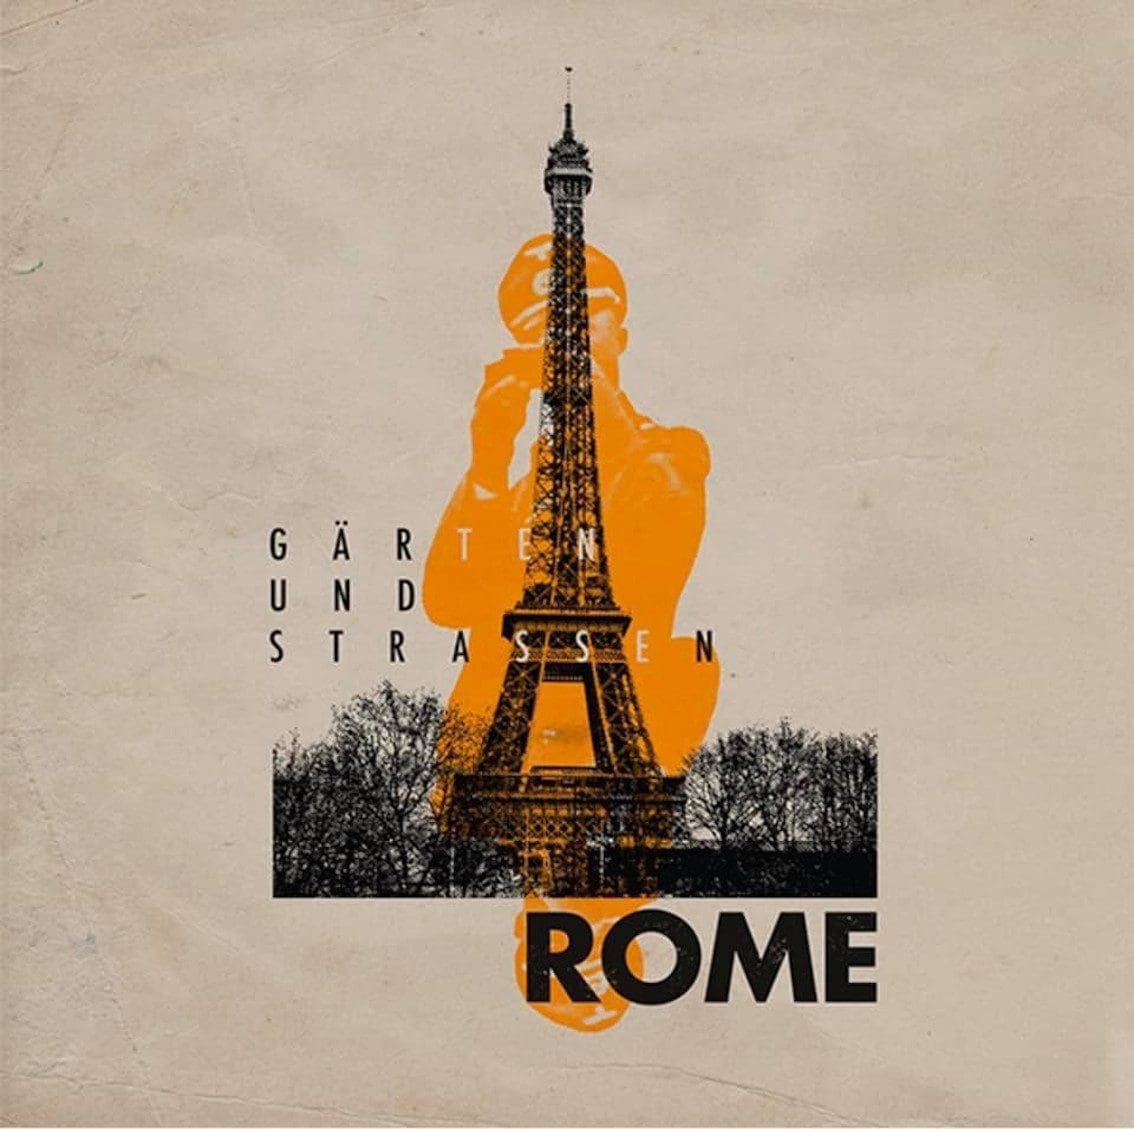 Rome returns with 'Gärten und Strassen' LP and 'Ächtung, Baby!' 7 inch (single from new album 'The lone furrow')